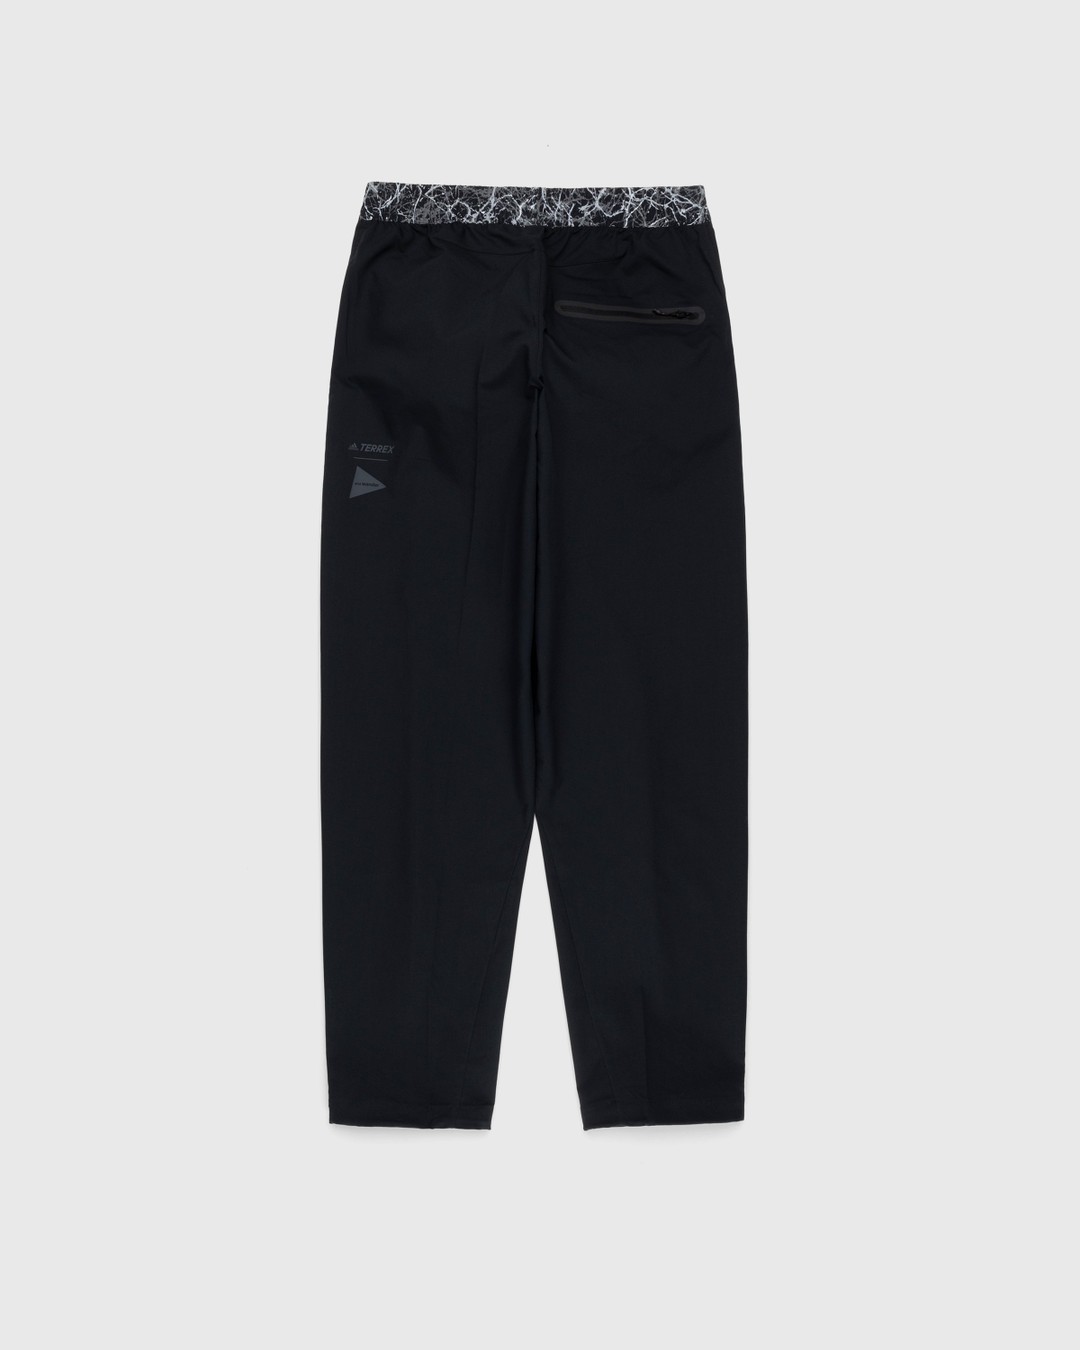 Adidas x And Wander – TERREX Hiking Pants Black - Active Pants - Black - Image 2